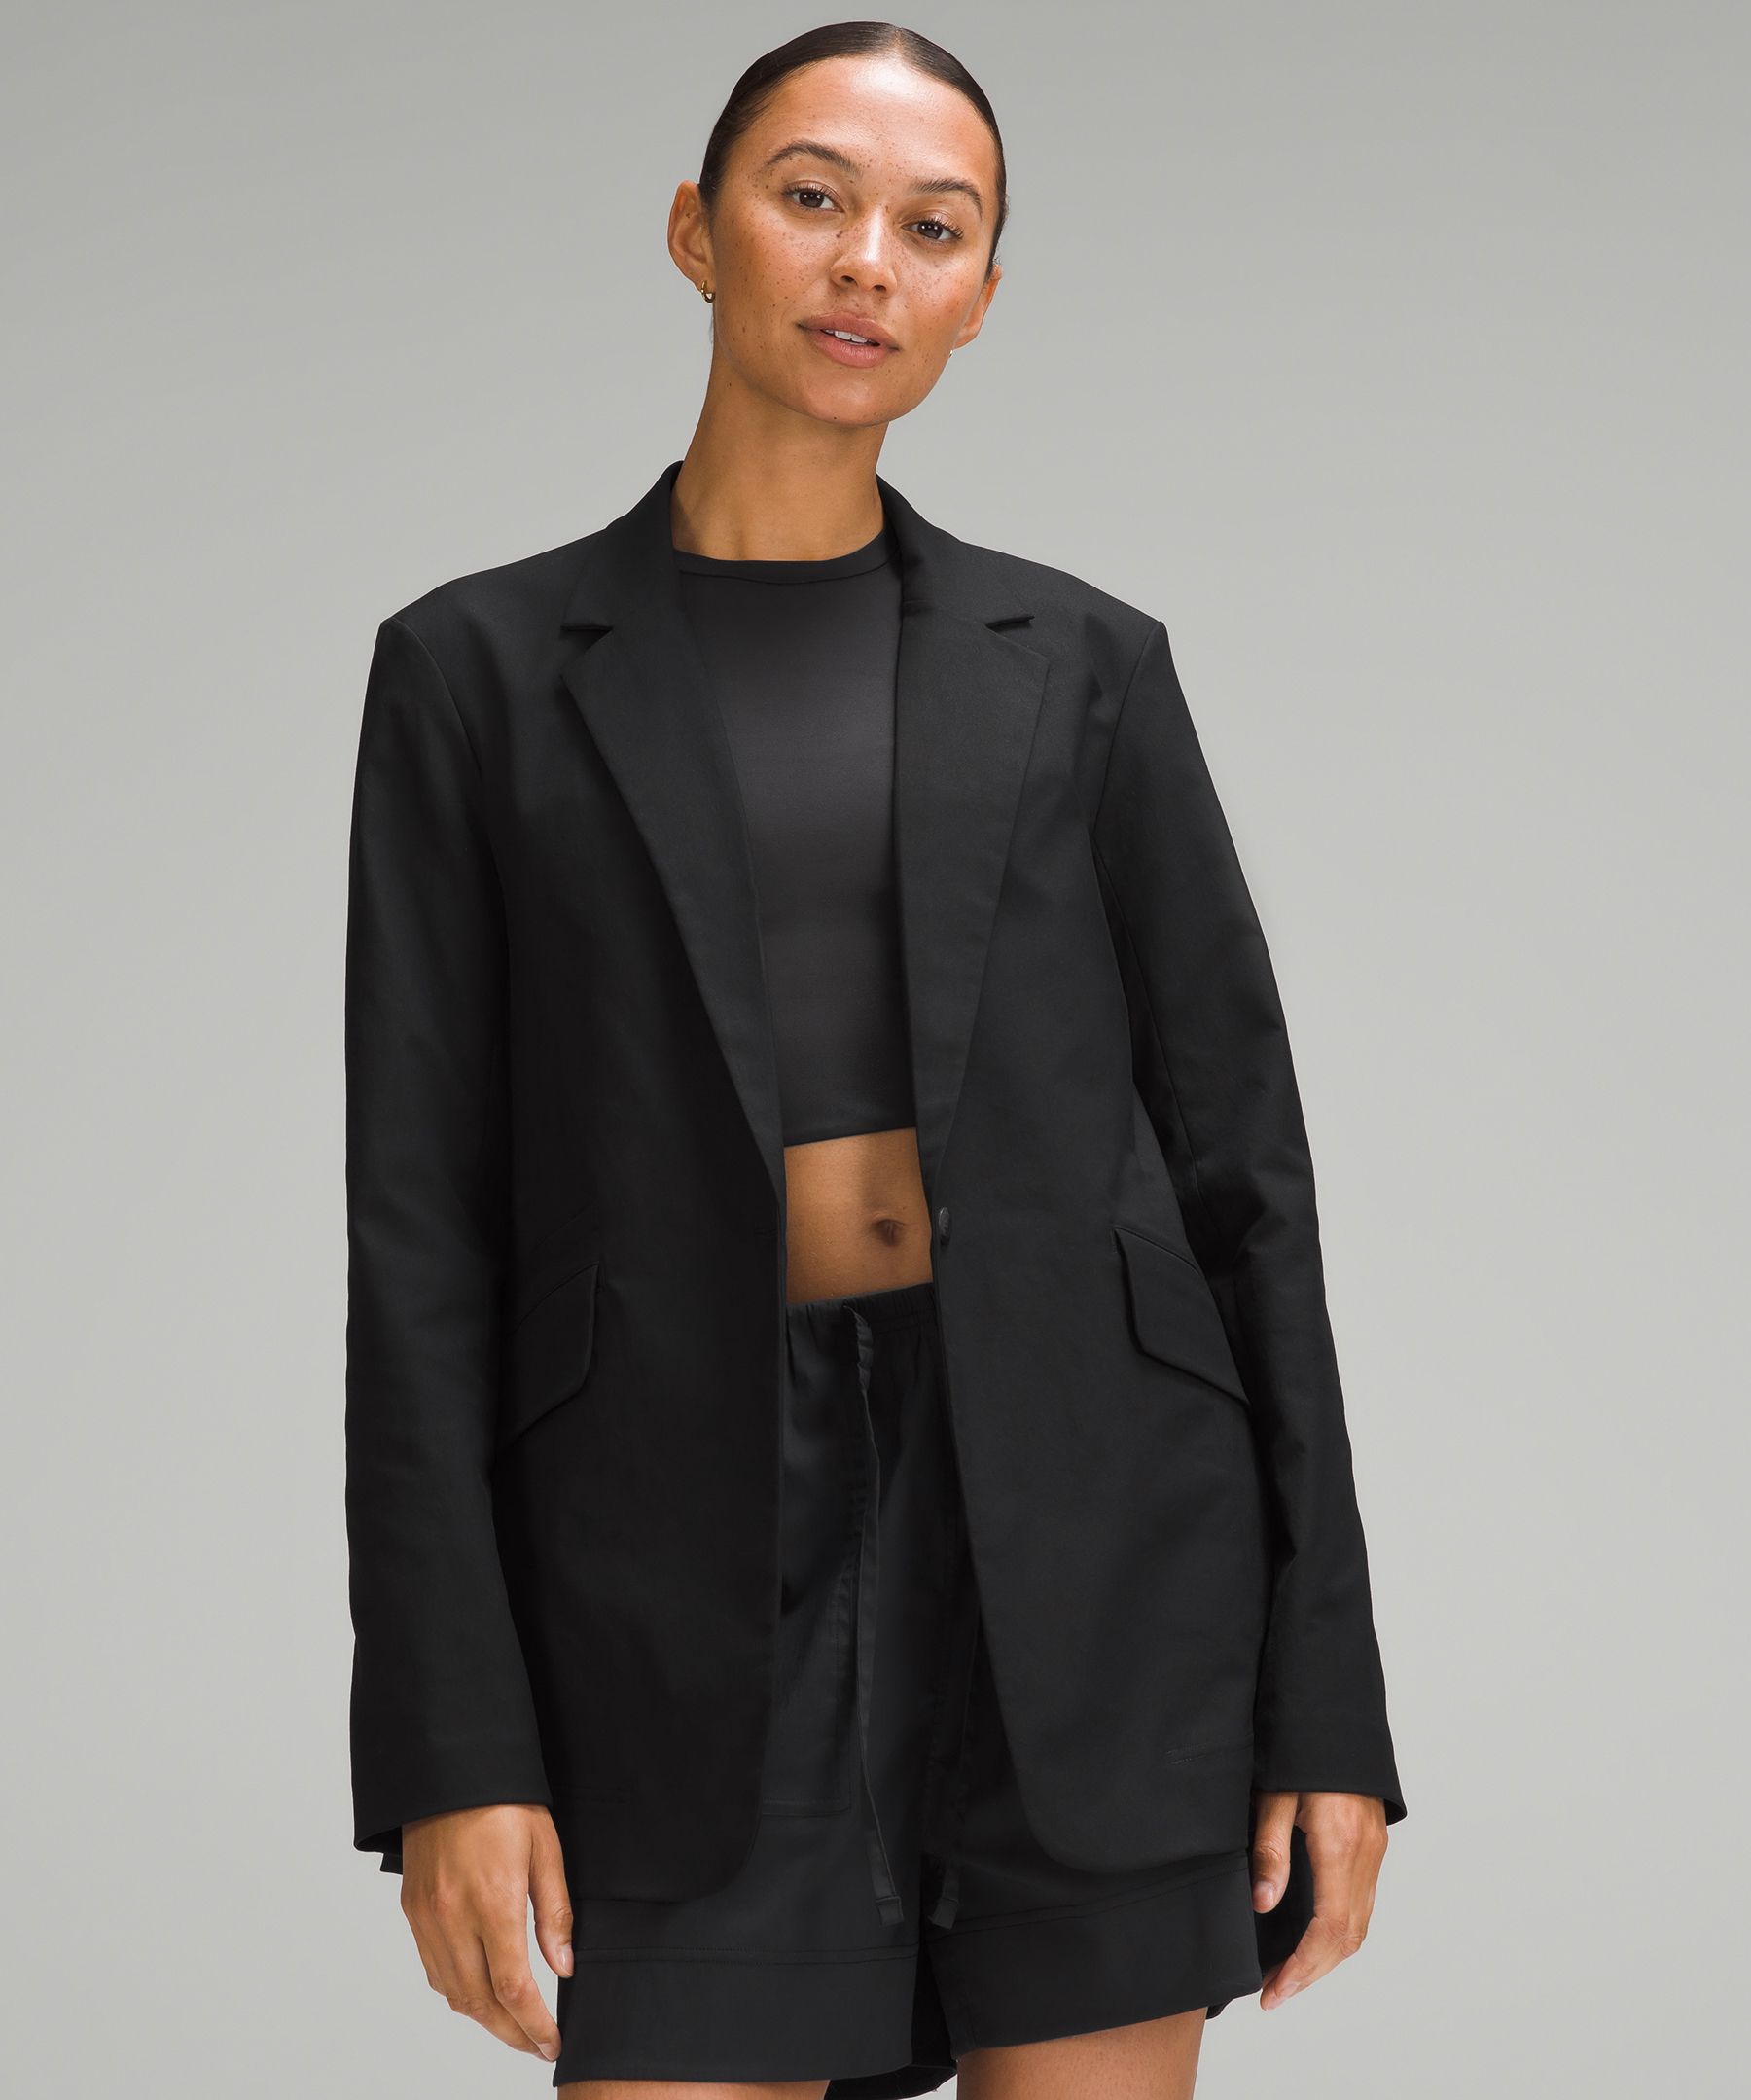 Relaxed-Fit Twill Blazer | Women's Coats & Jackets